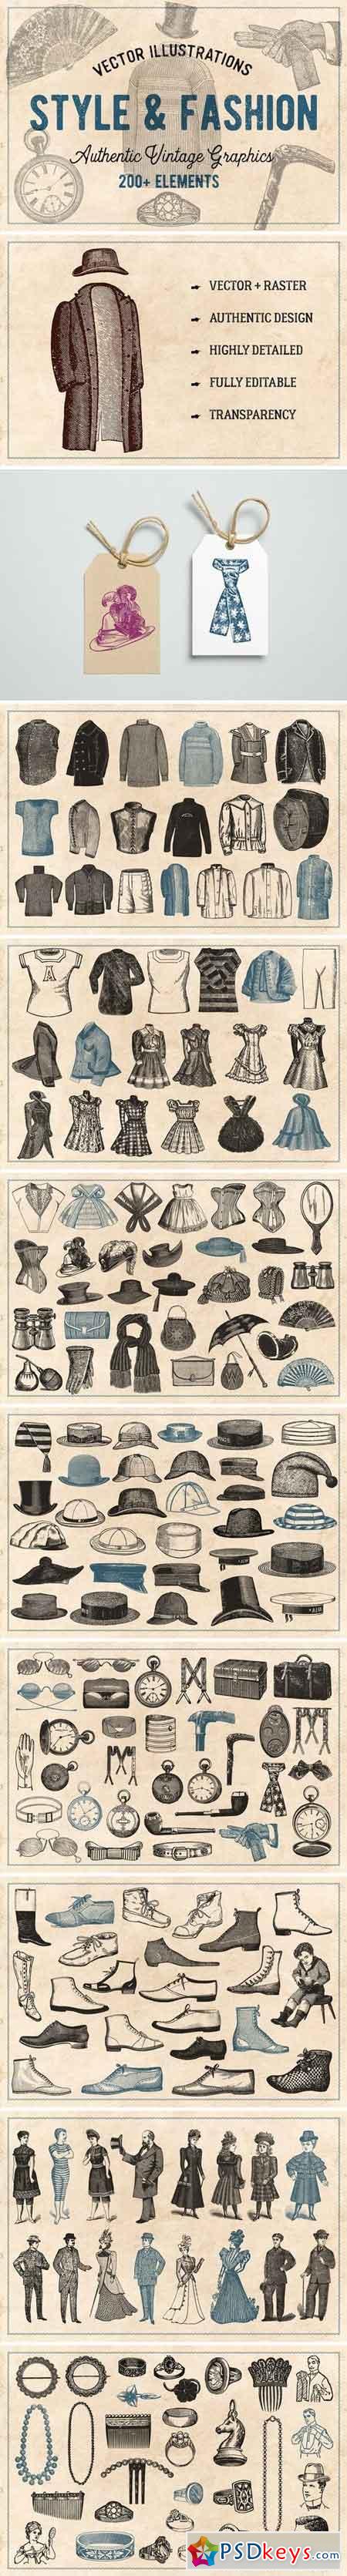 200 Vintage Fashion Illustrations 1763545